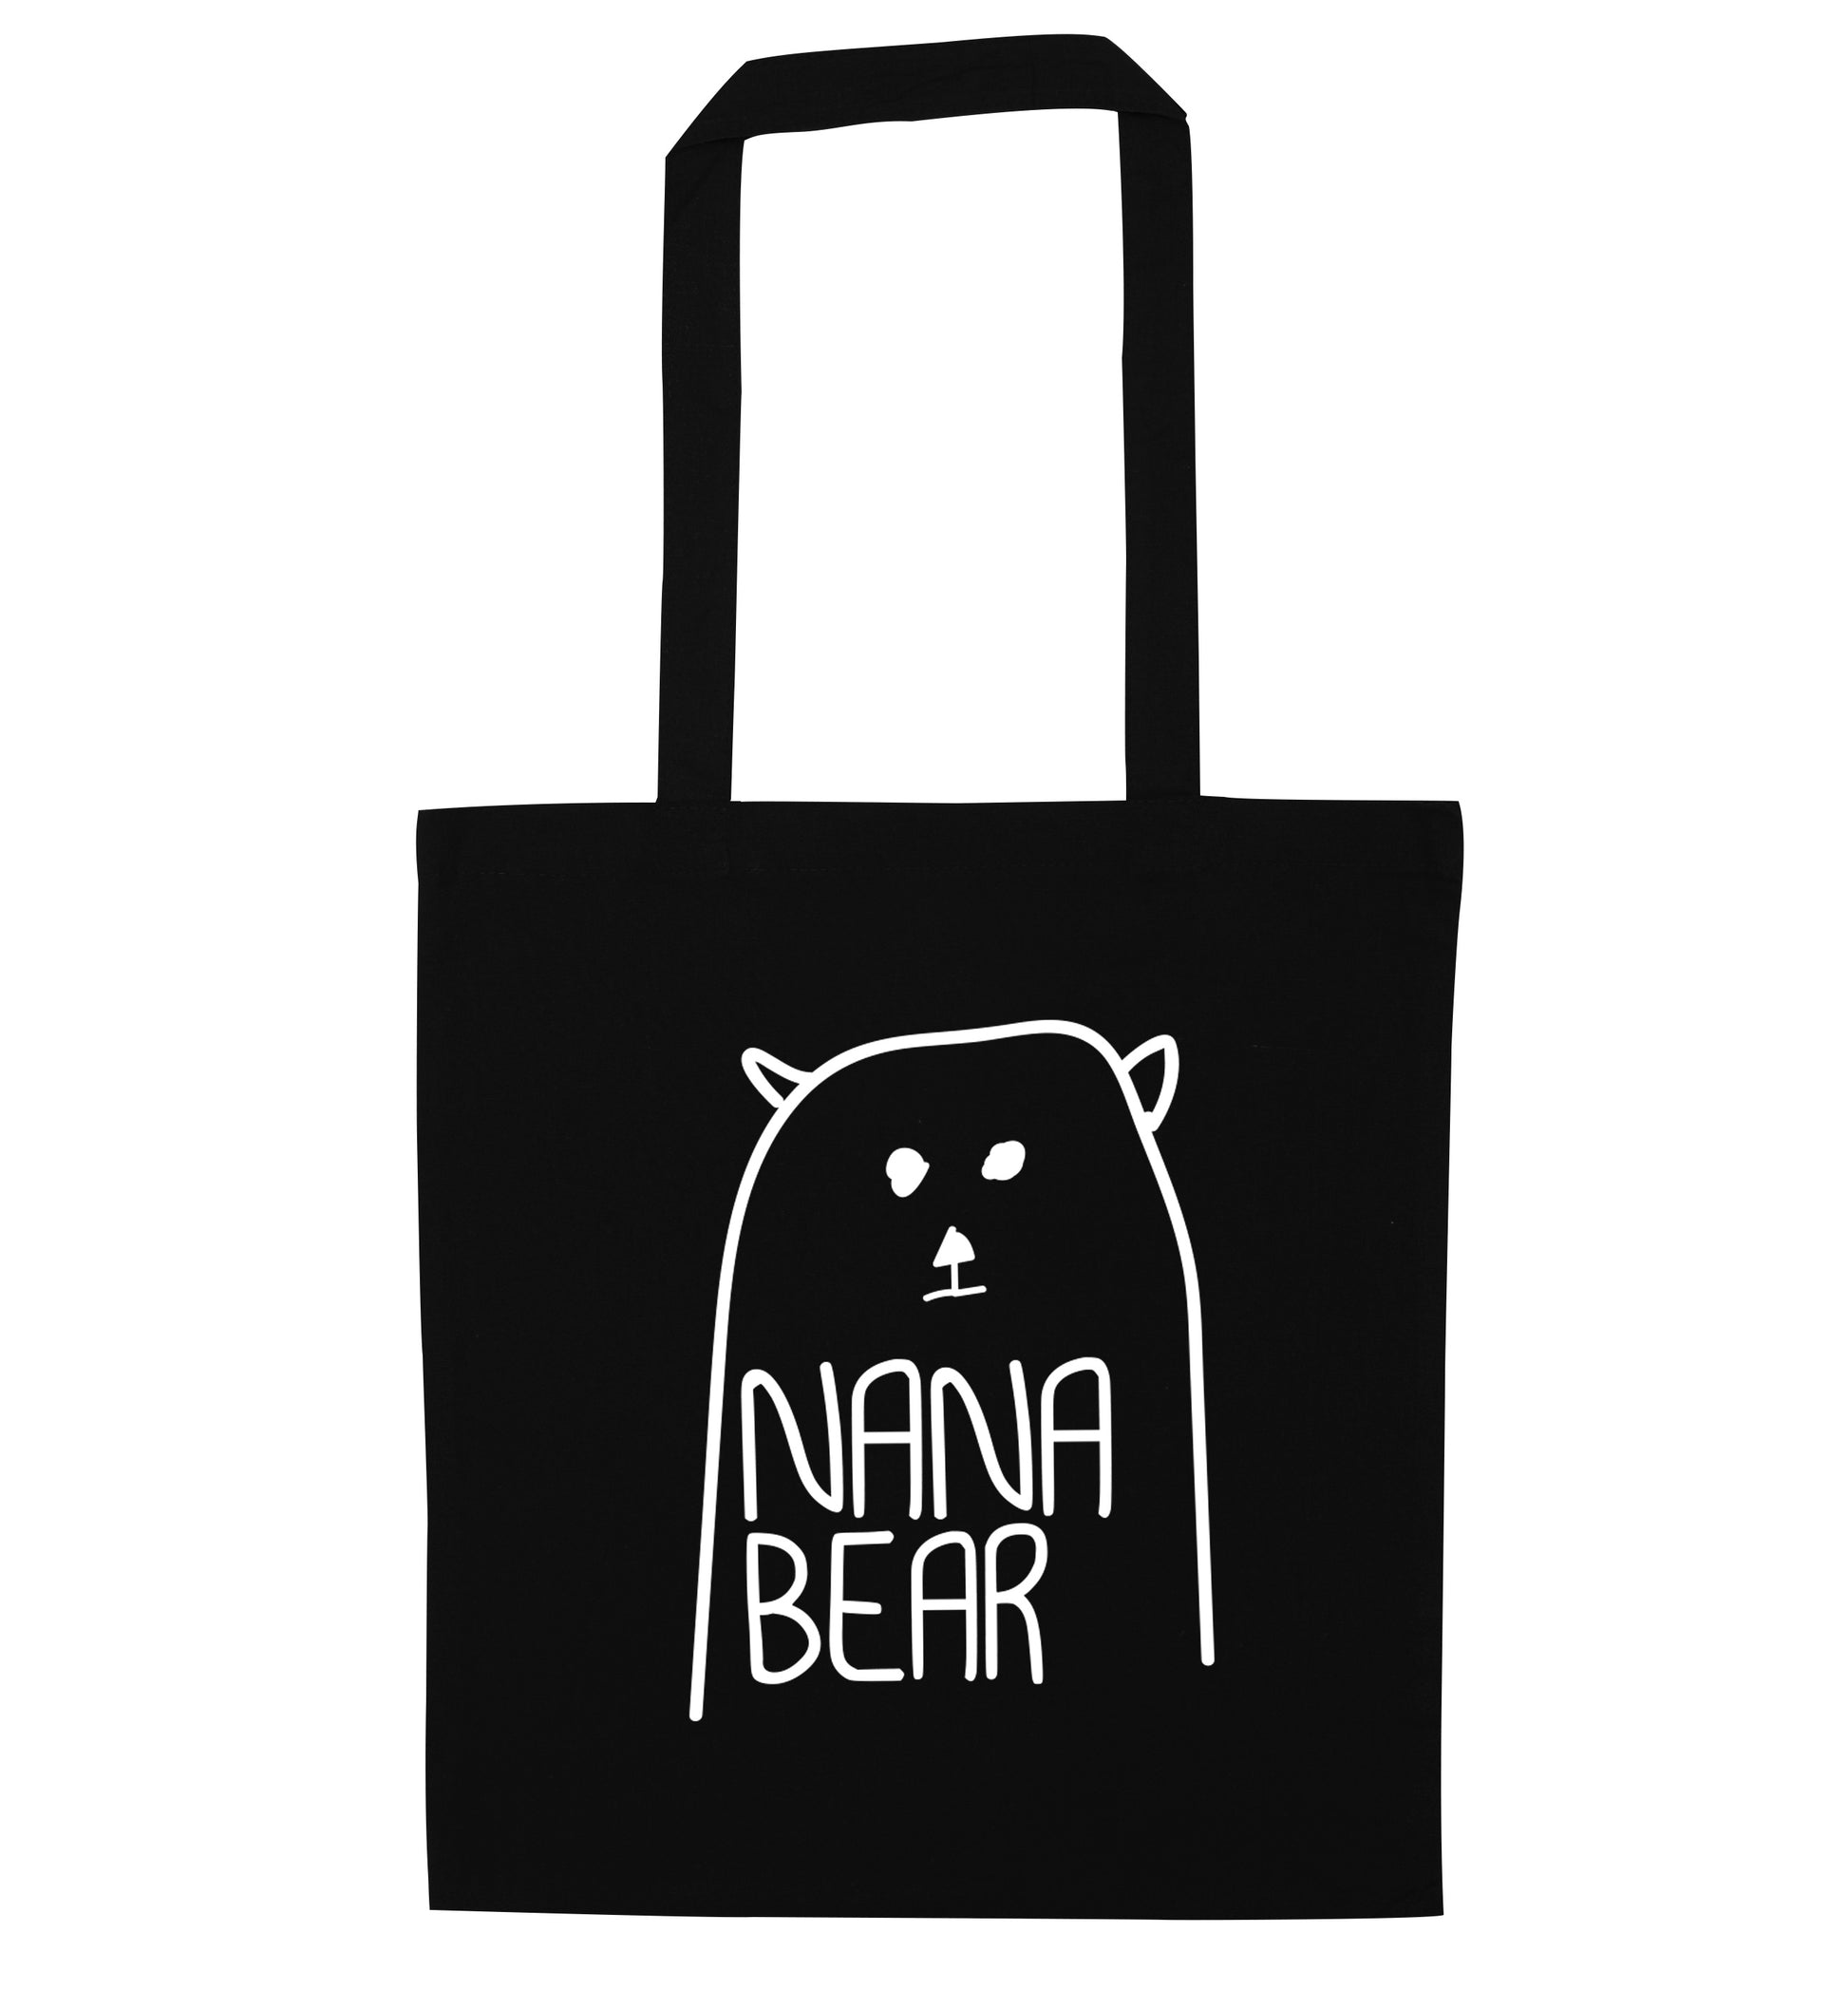 Nana bear black tote bag